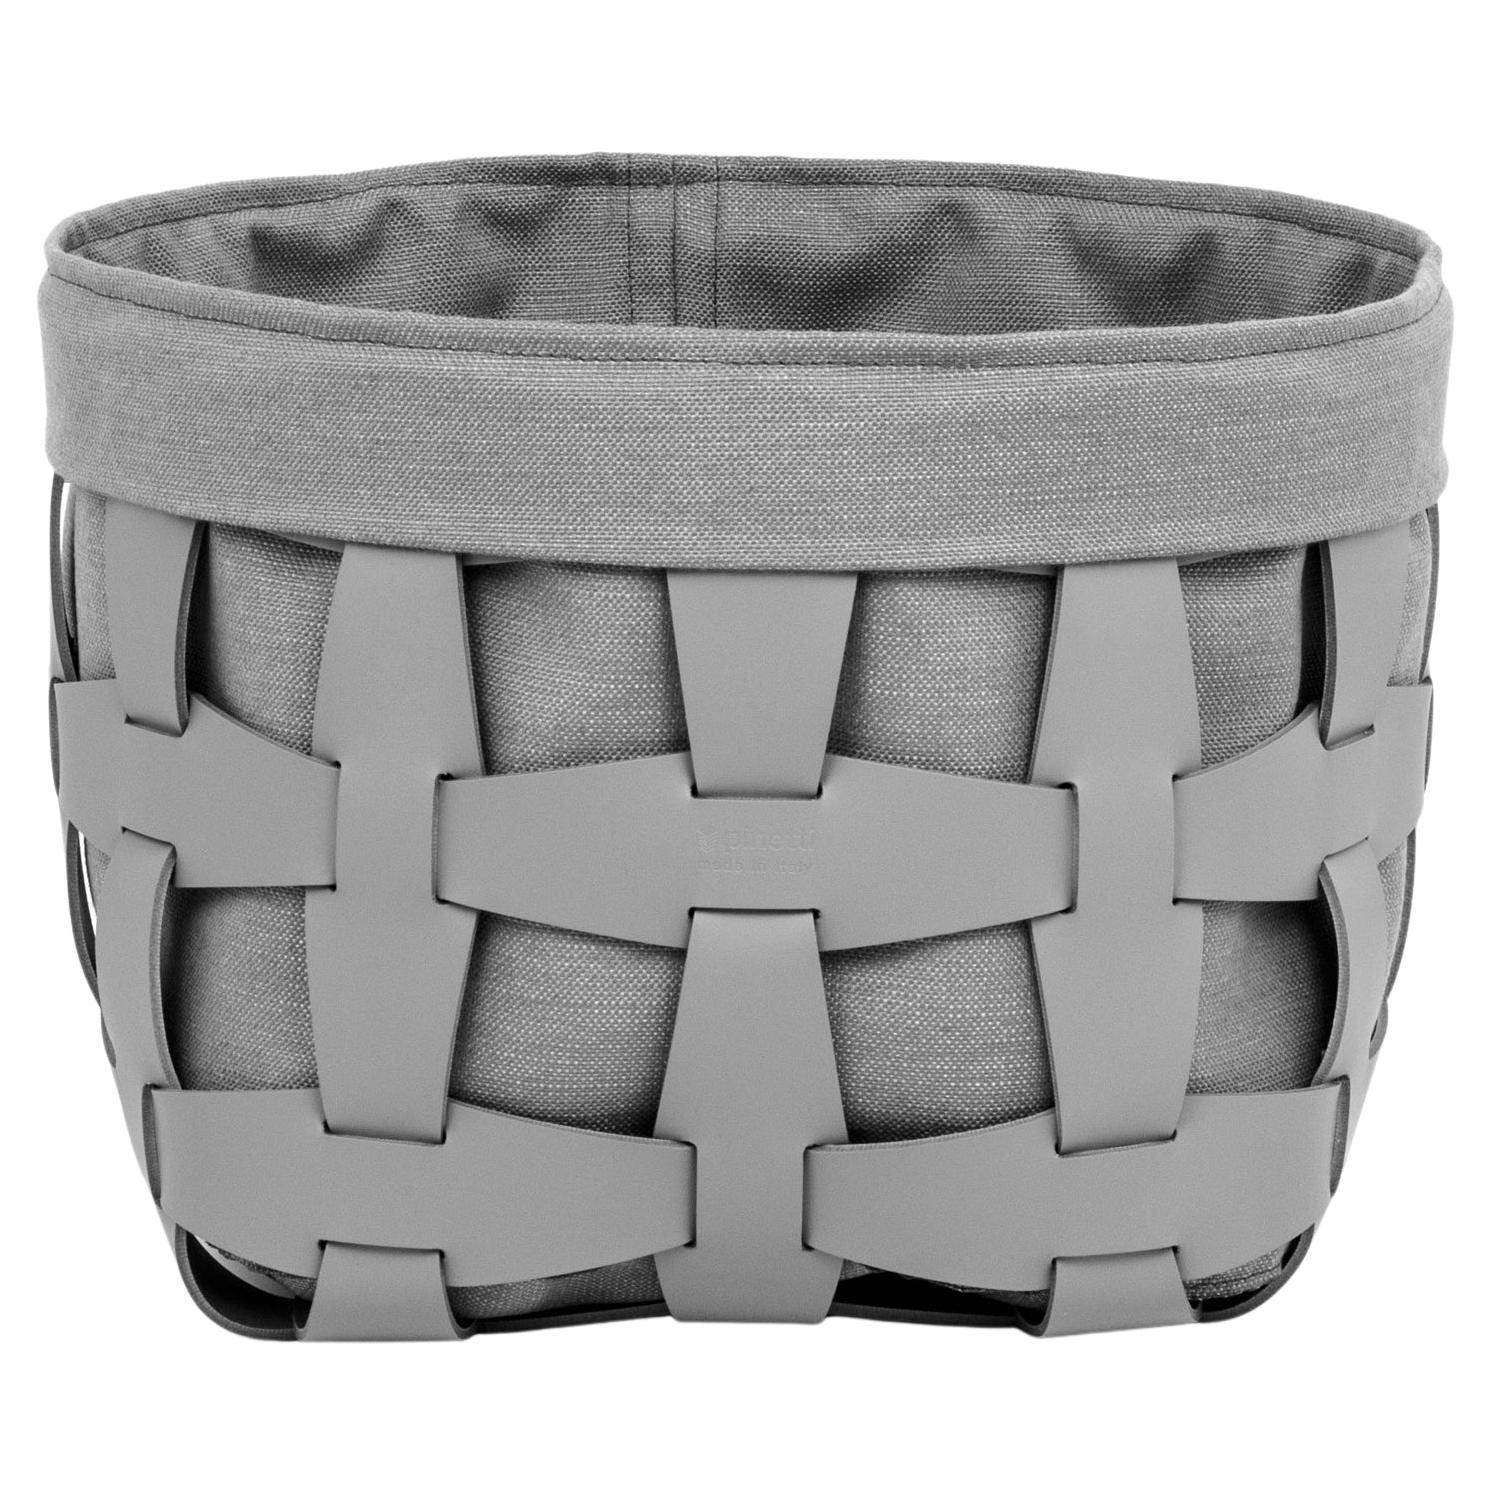 21st Century Hook Magazine Holder Leather Basket with Fabric Handmade in Italy